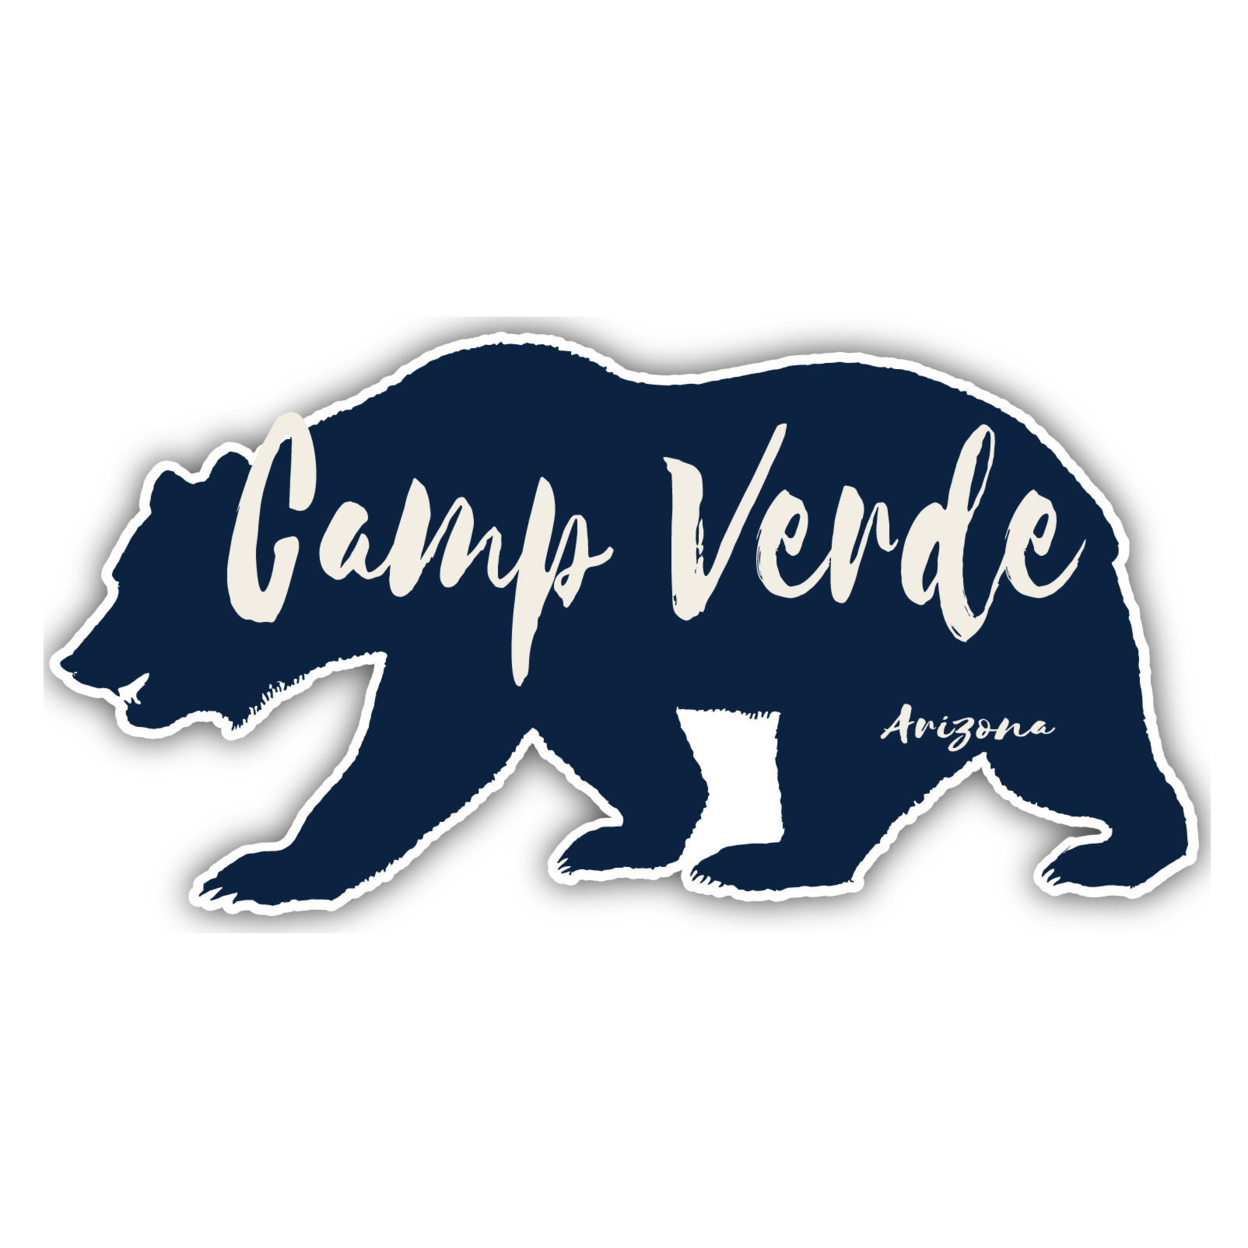 Camp Verde Arizona Souvenir Decorative Stickers (Choose Theme And Size) - Single Unit, 2-Inch, Tent